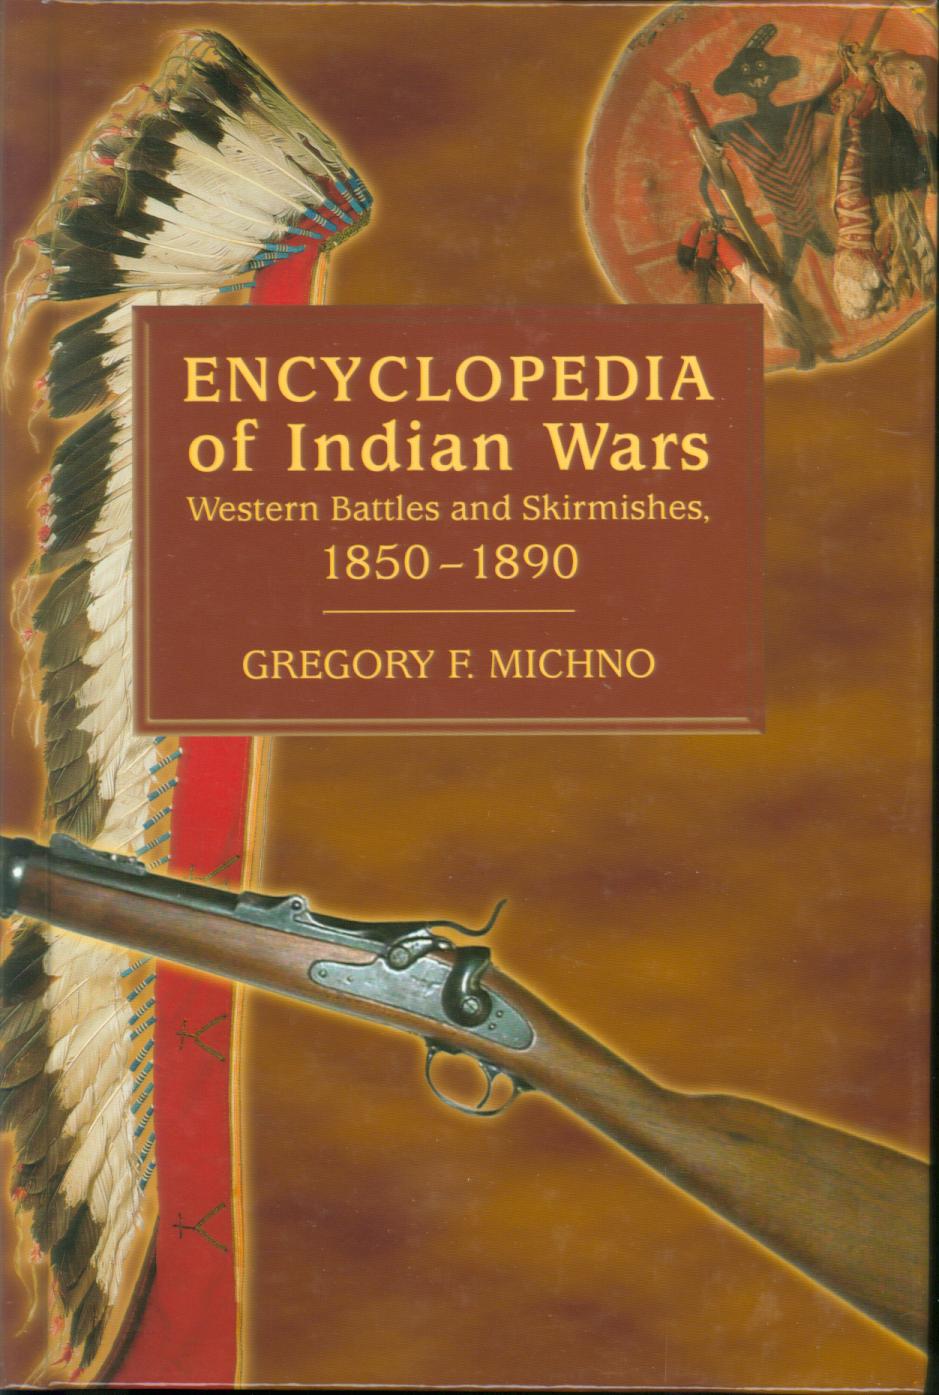 ENCYLOPEDIA OF INDIAN WARS: Western battles and skirmishes, 1850-1890. 